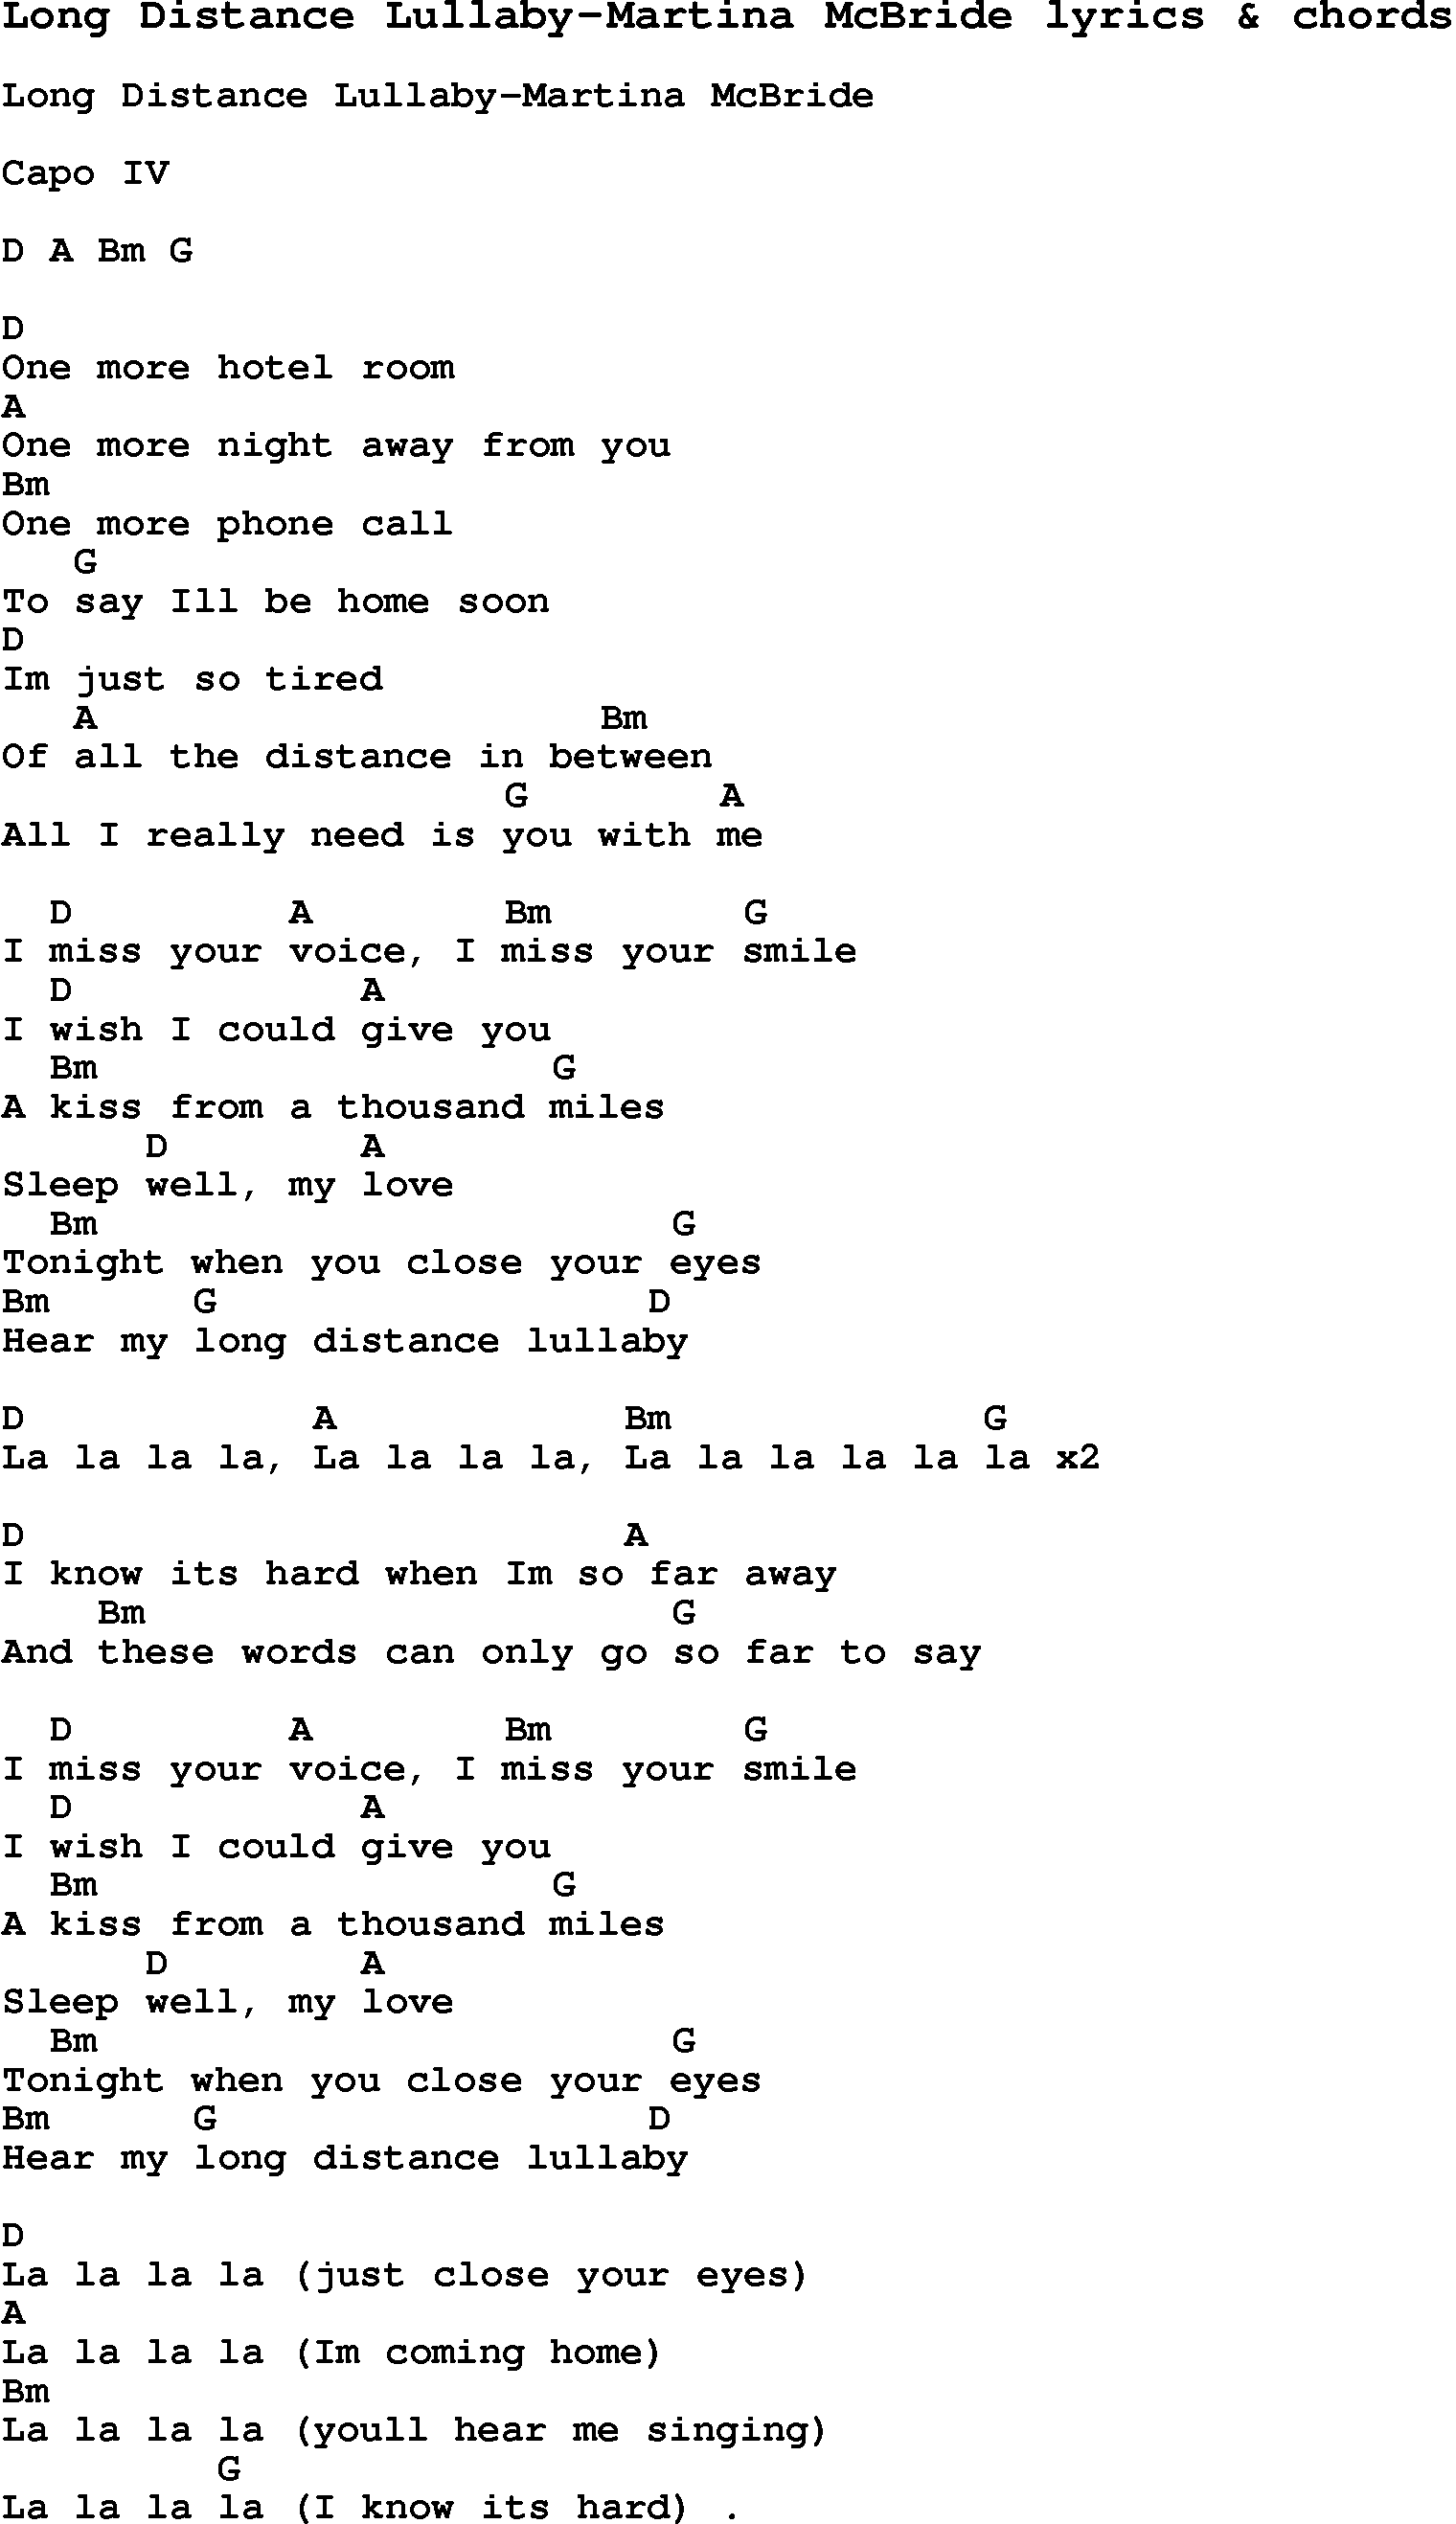 Love Song Lyrics for: Long Distance Lullaby-Martina McBride with chords for Ukulele, Guitar Banjo etc.